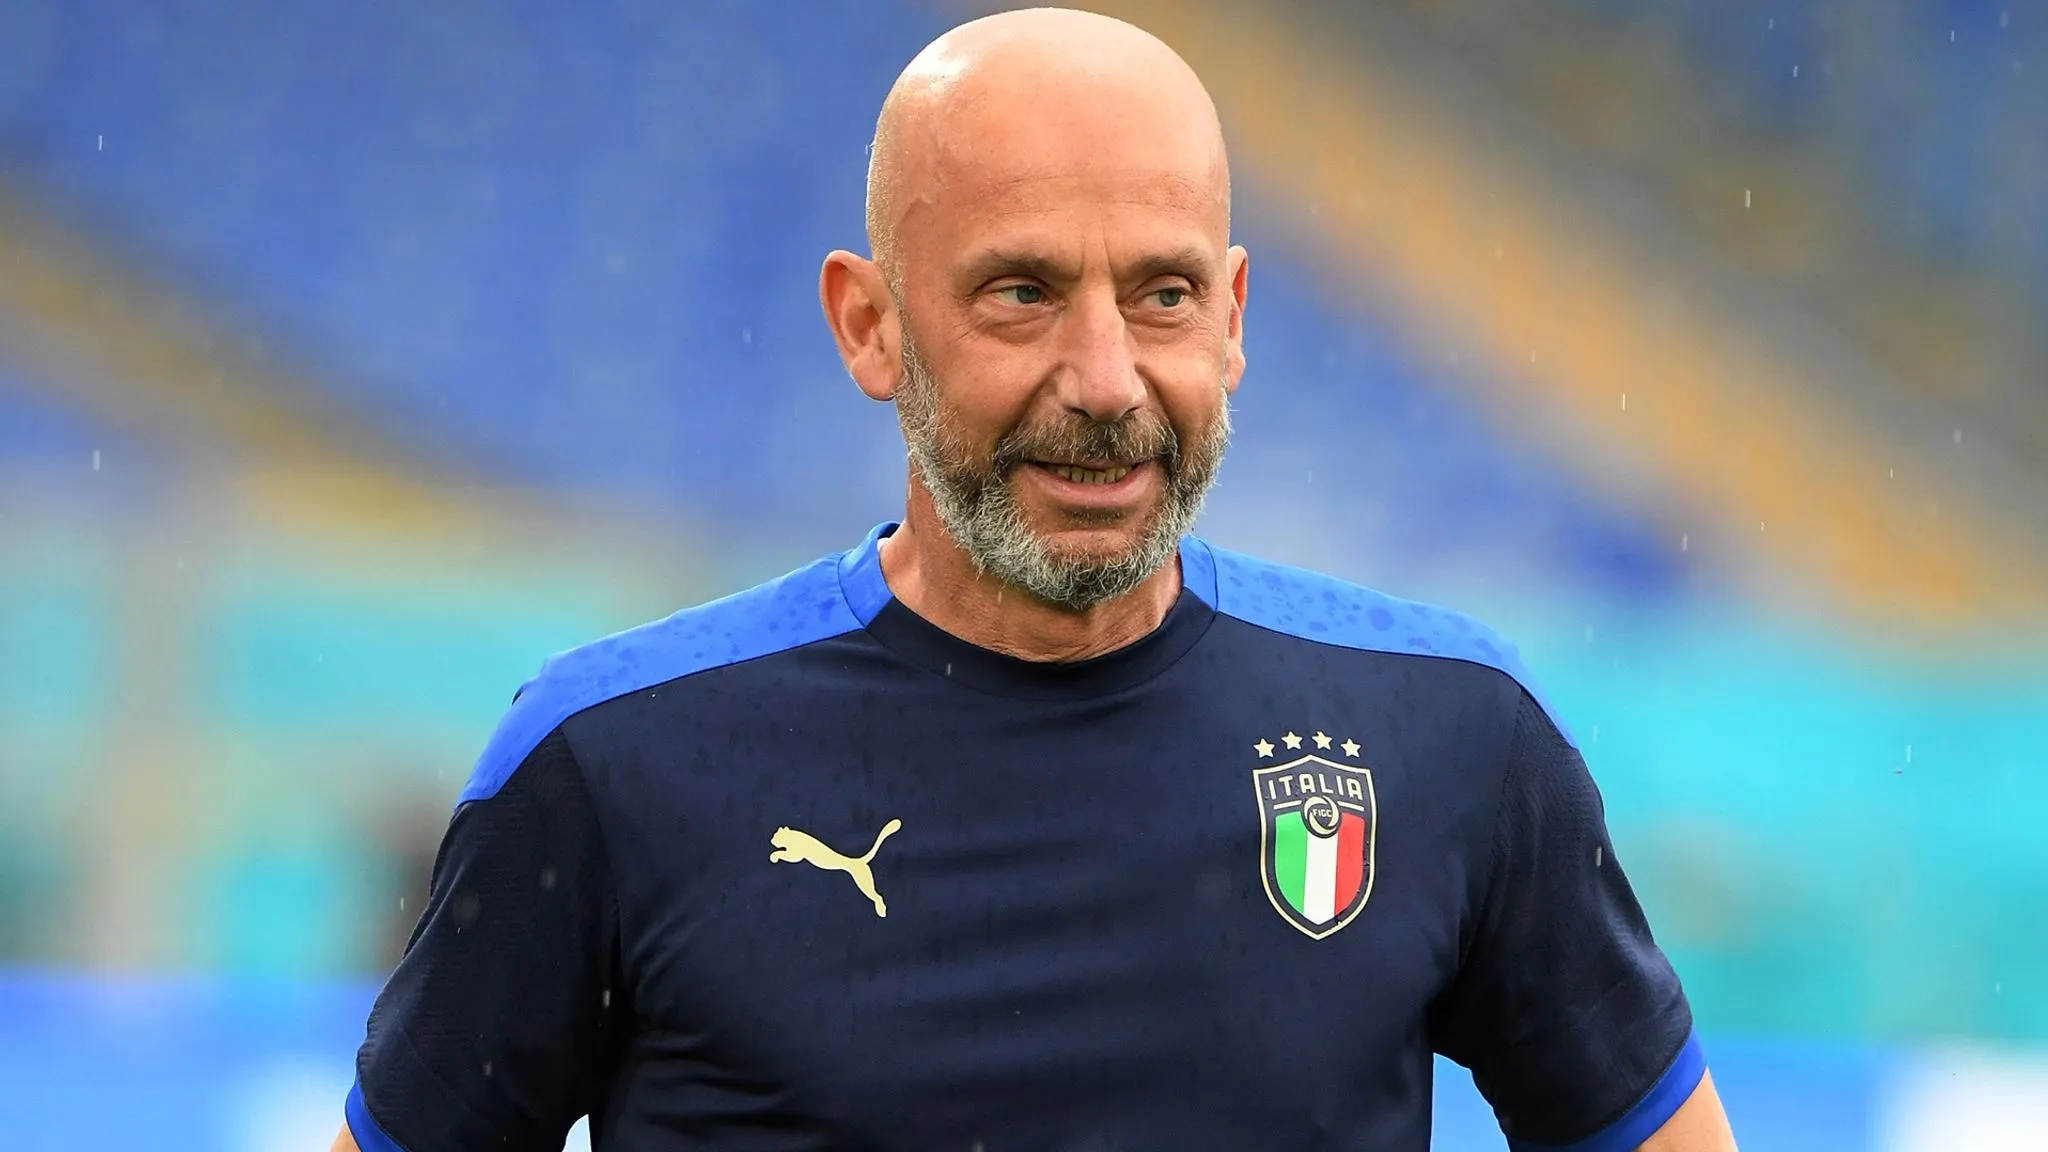 Falleció Gianluca Vialli, leyenda del fútbol italiano | Canal Showsport